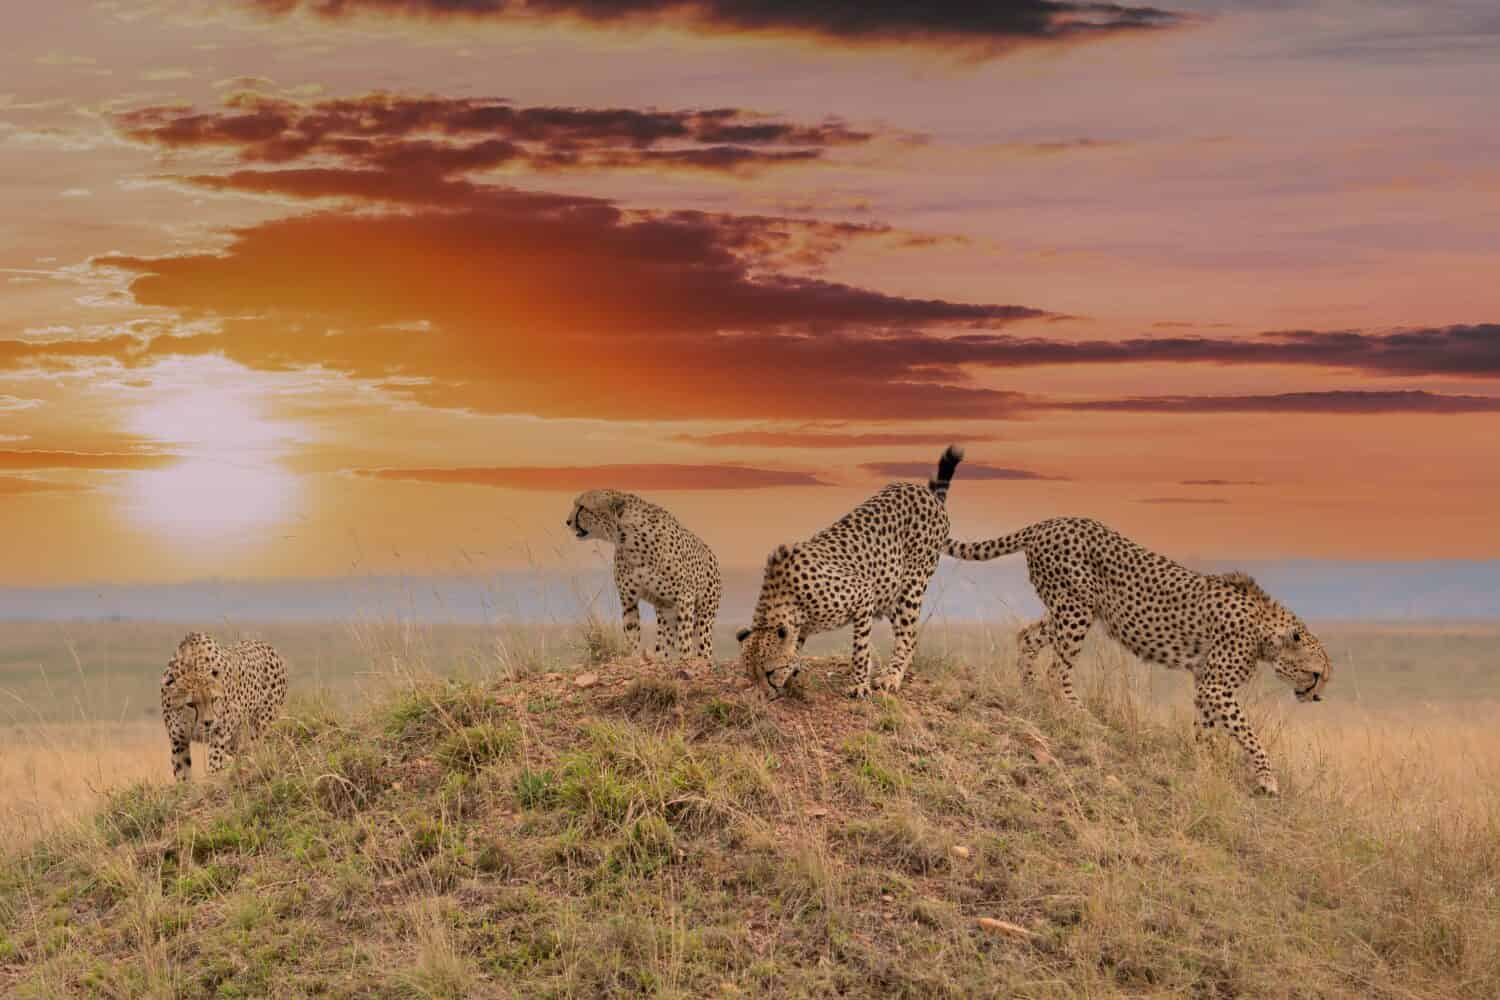 Famous brother cheetah coalition called Tano Bora marking their territory during beautiful sunrise, Maasai Mara National Reserve, Kenya